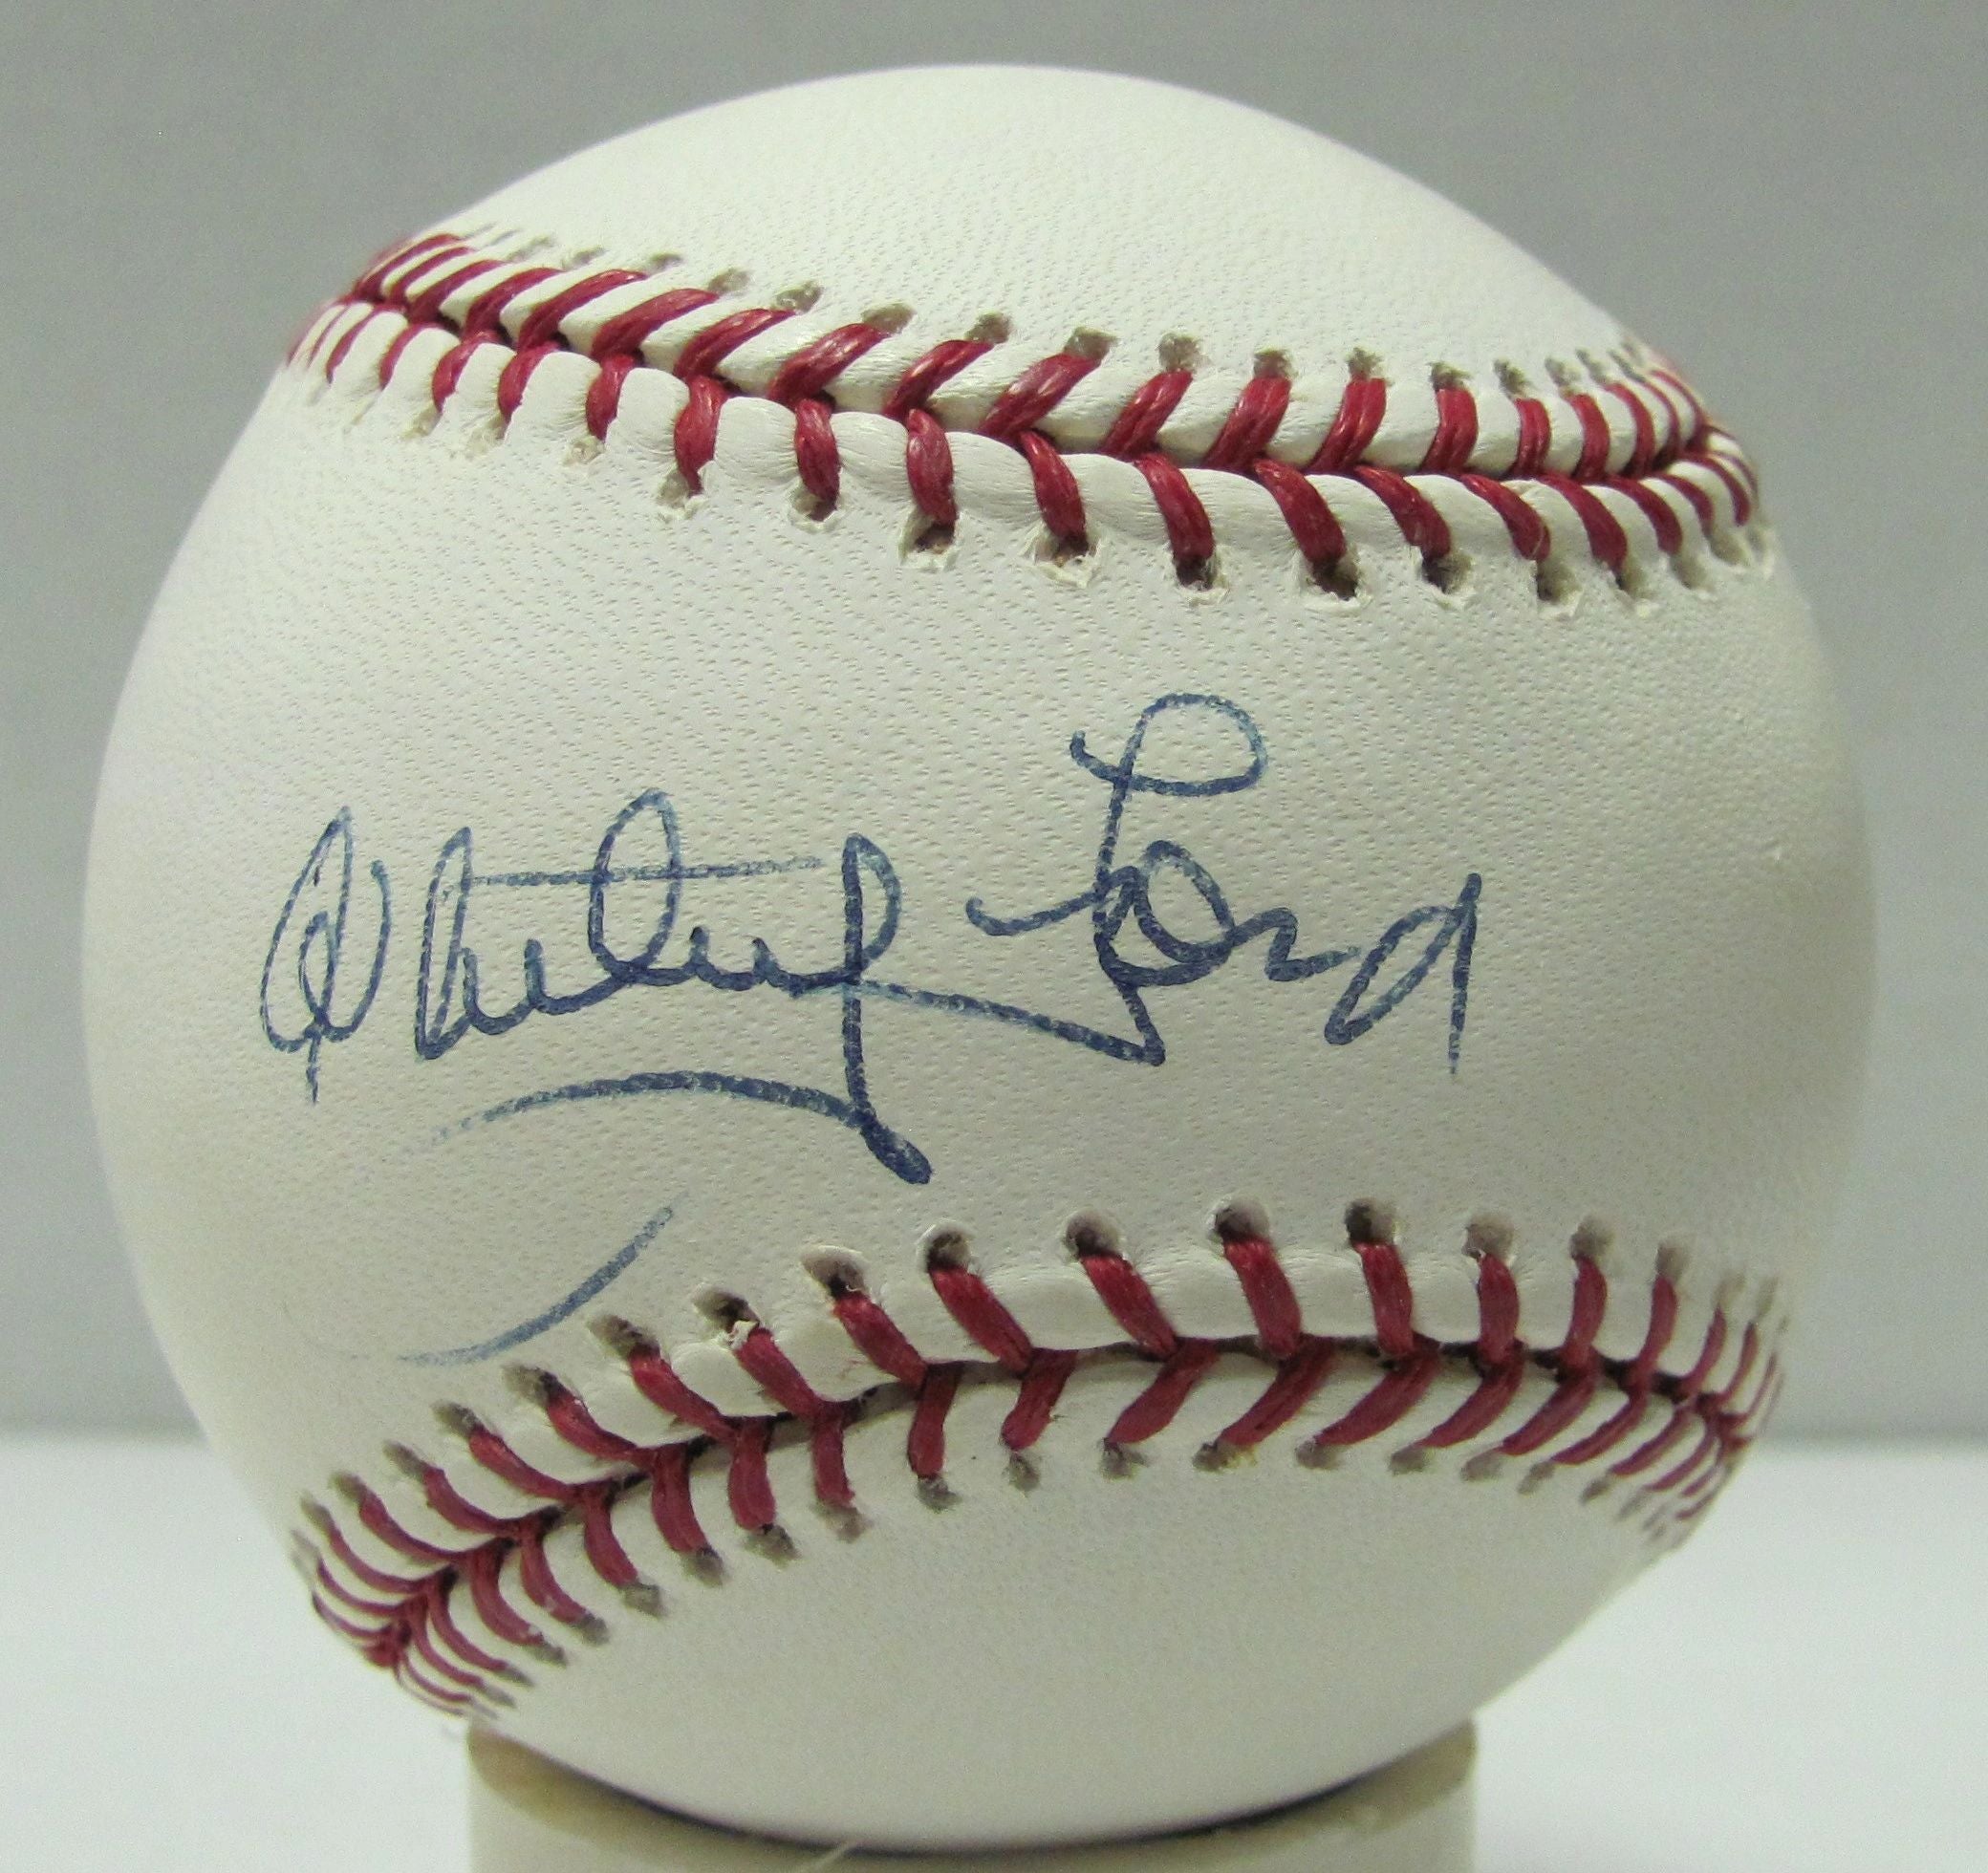 Whitey Ford Signed Baseball - Official Major League Baseball Allen "Bud" Selig" W/JSA COA Free Shipping!!